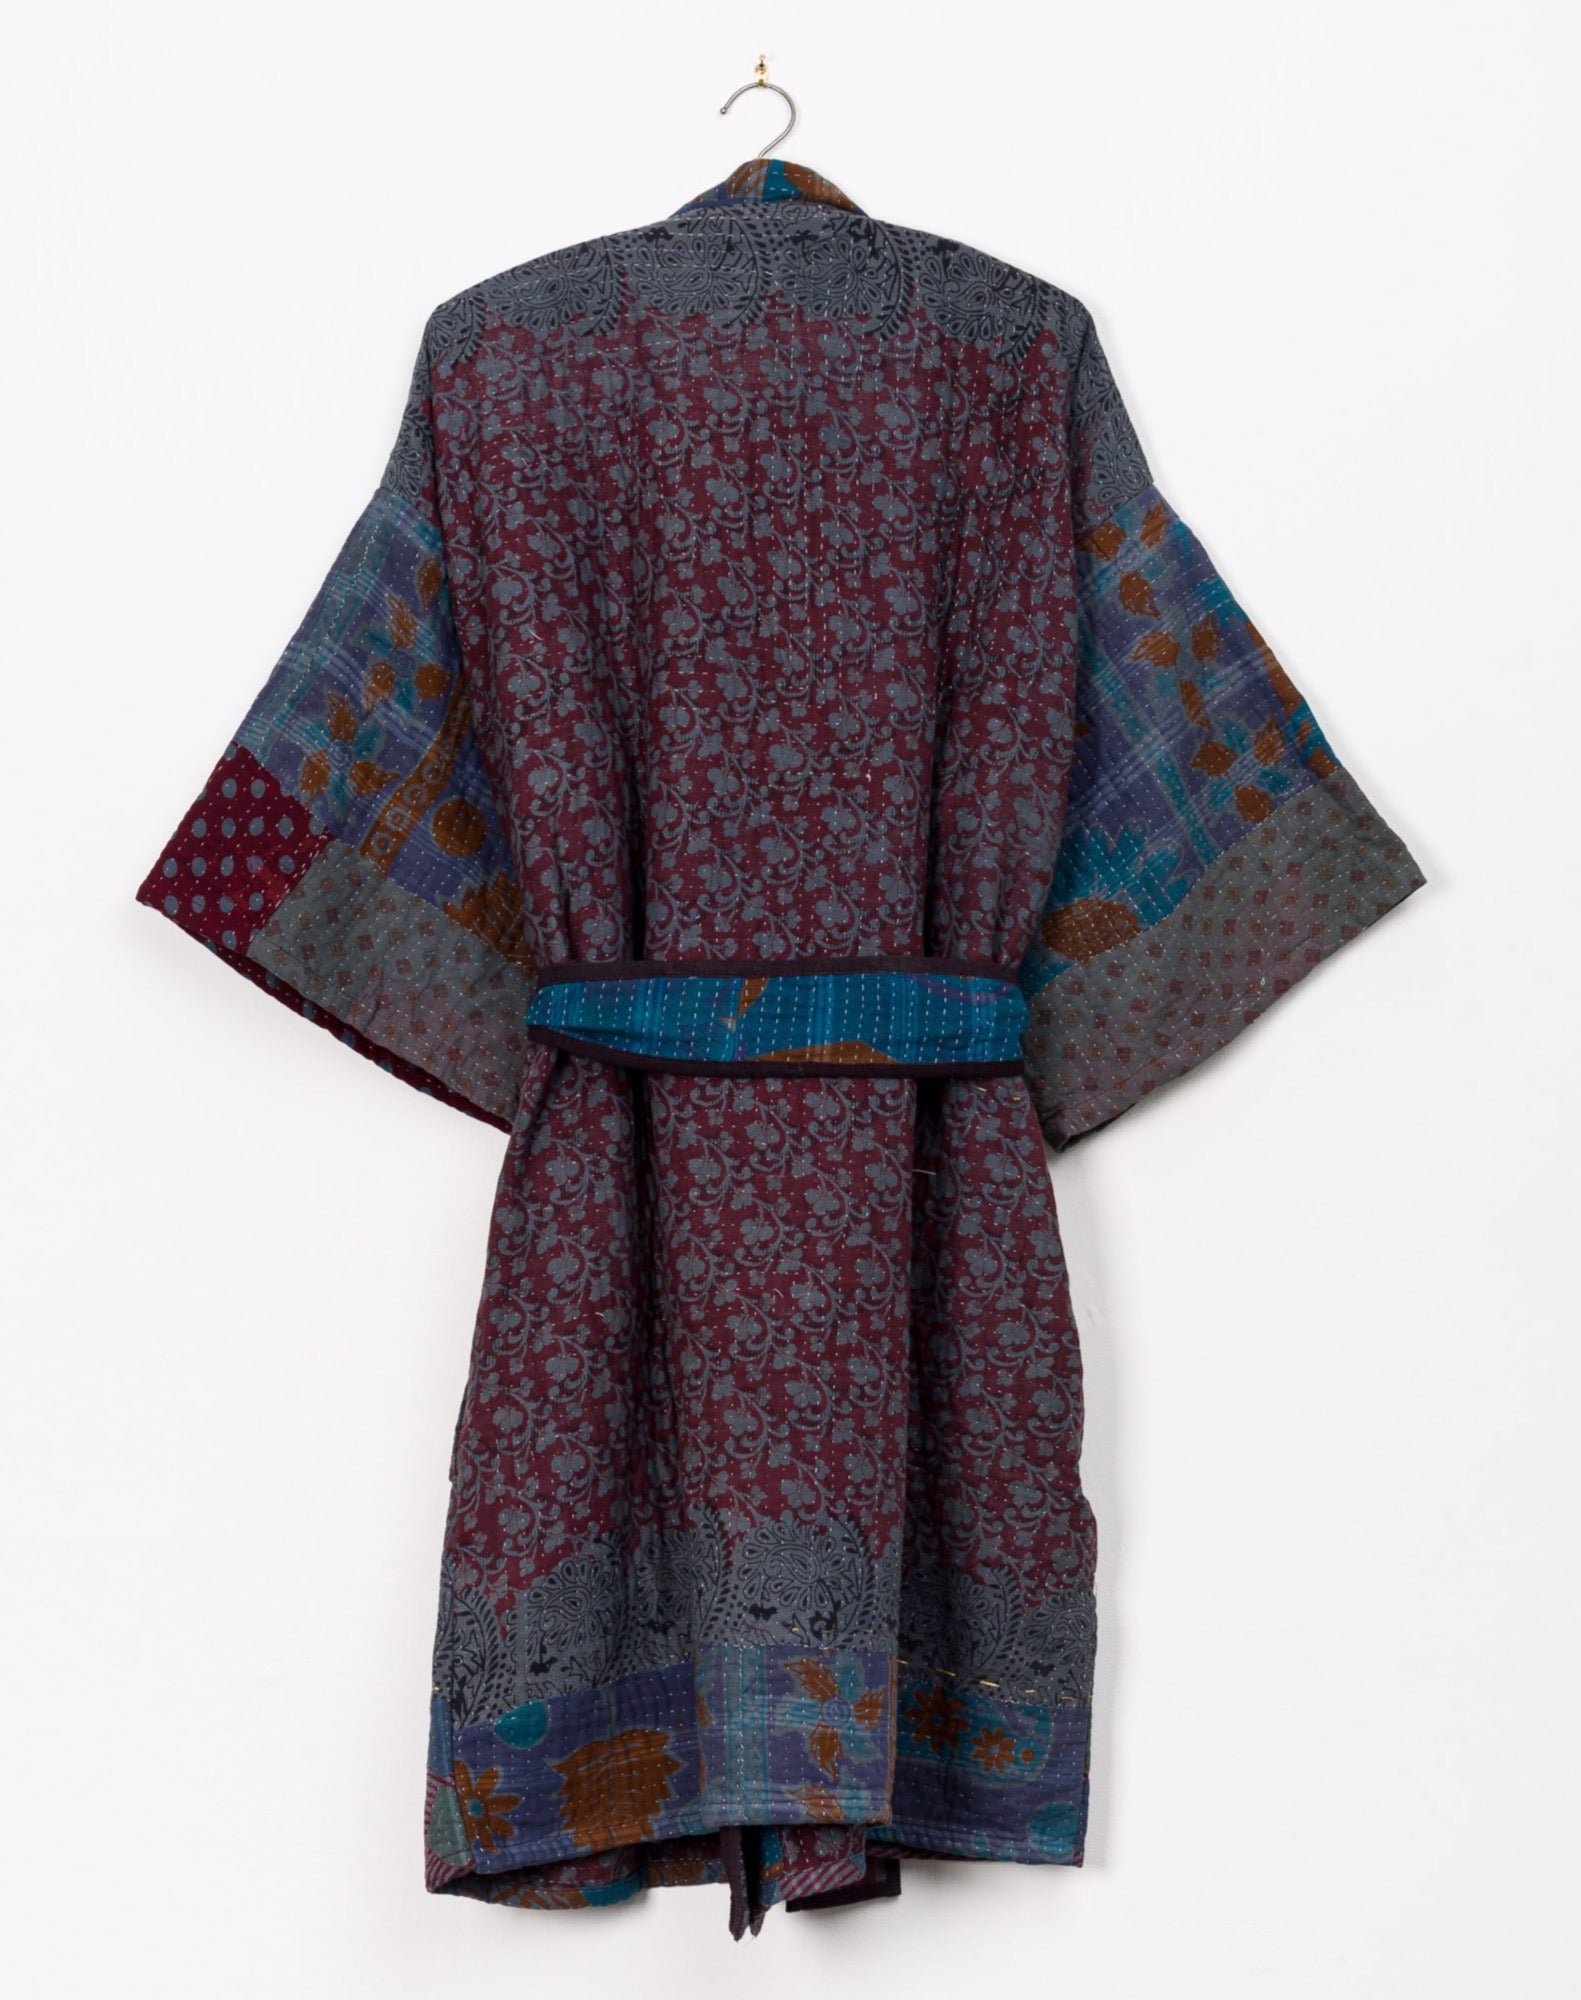 Taran Robe in Quilted Kantha - XS/S